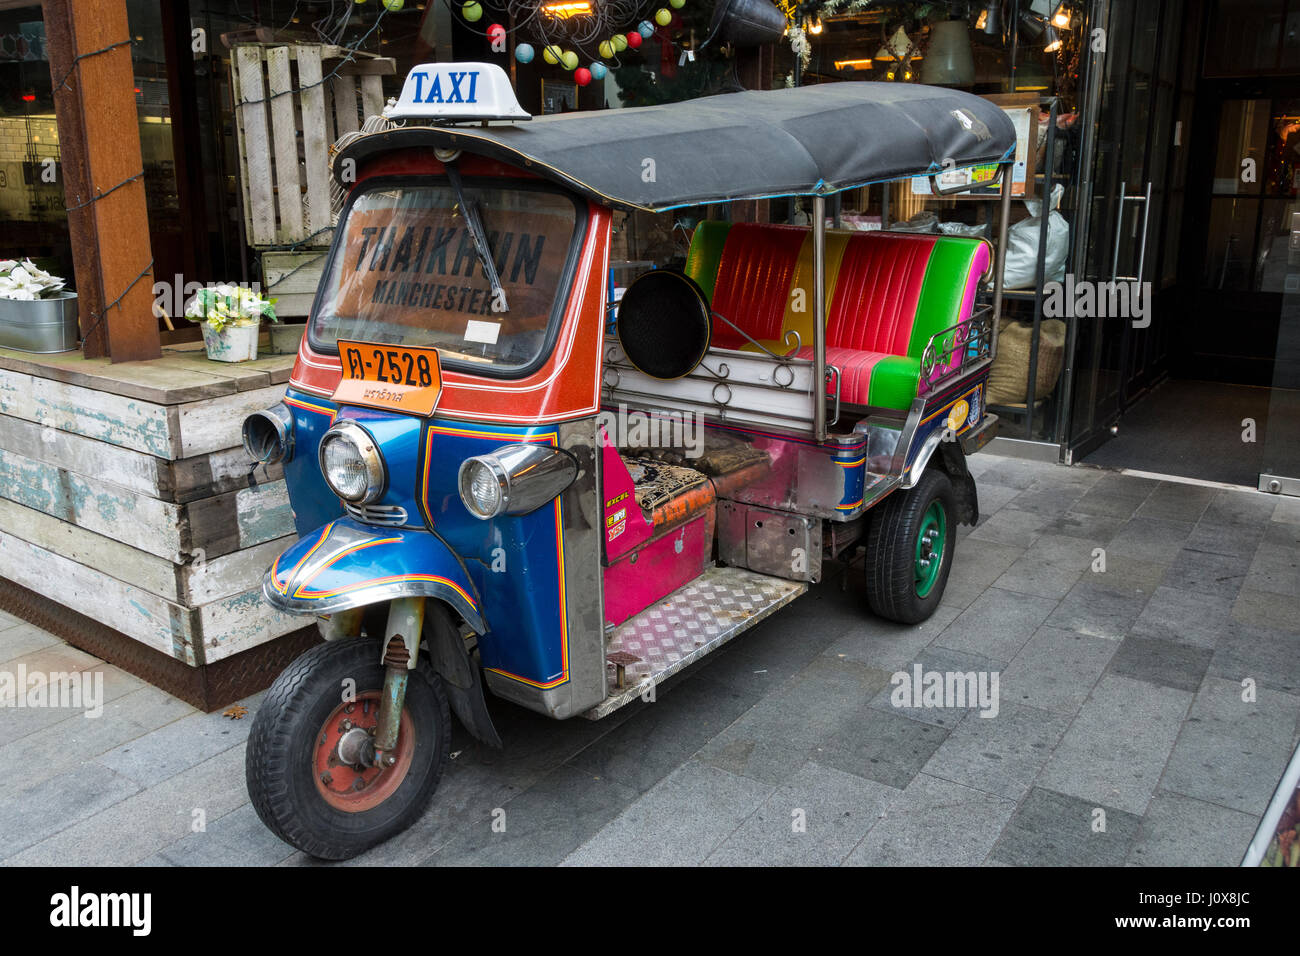 A tuk-tuk, or auto-rickshaw, on display at a Thai restaurant, Spinningfields, Manchester, England, UK Stock Photo